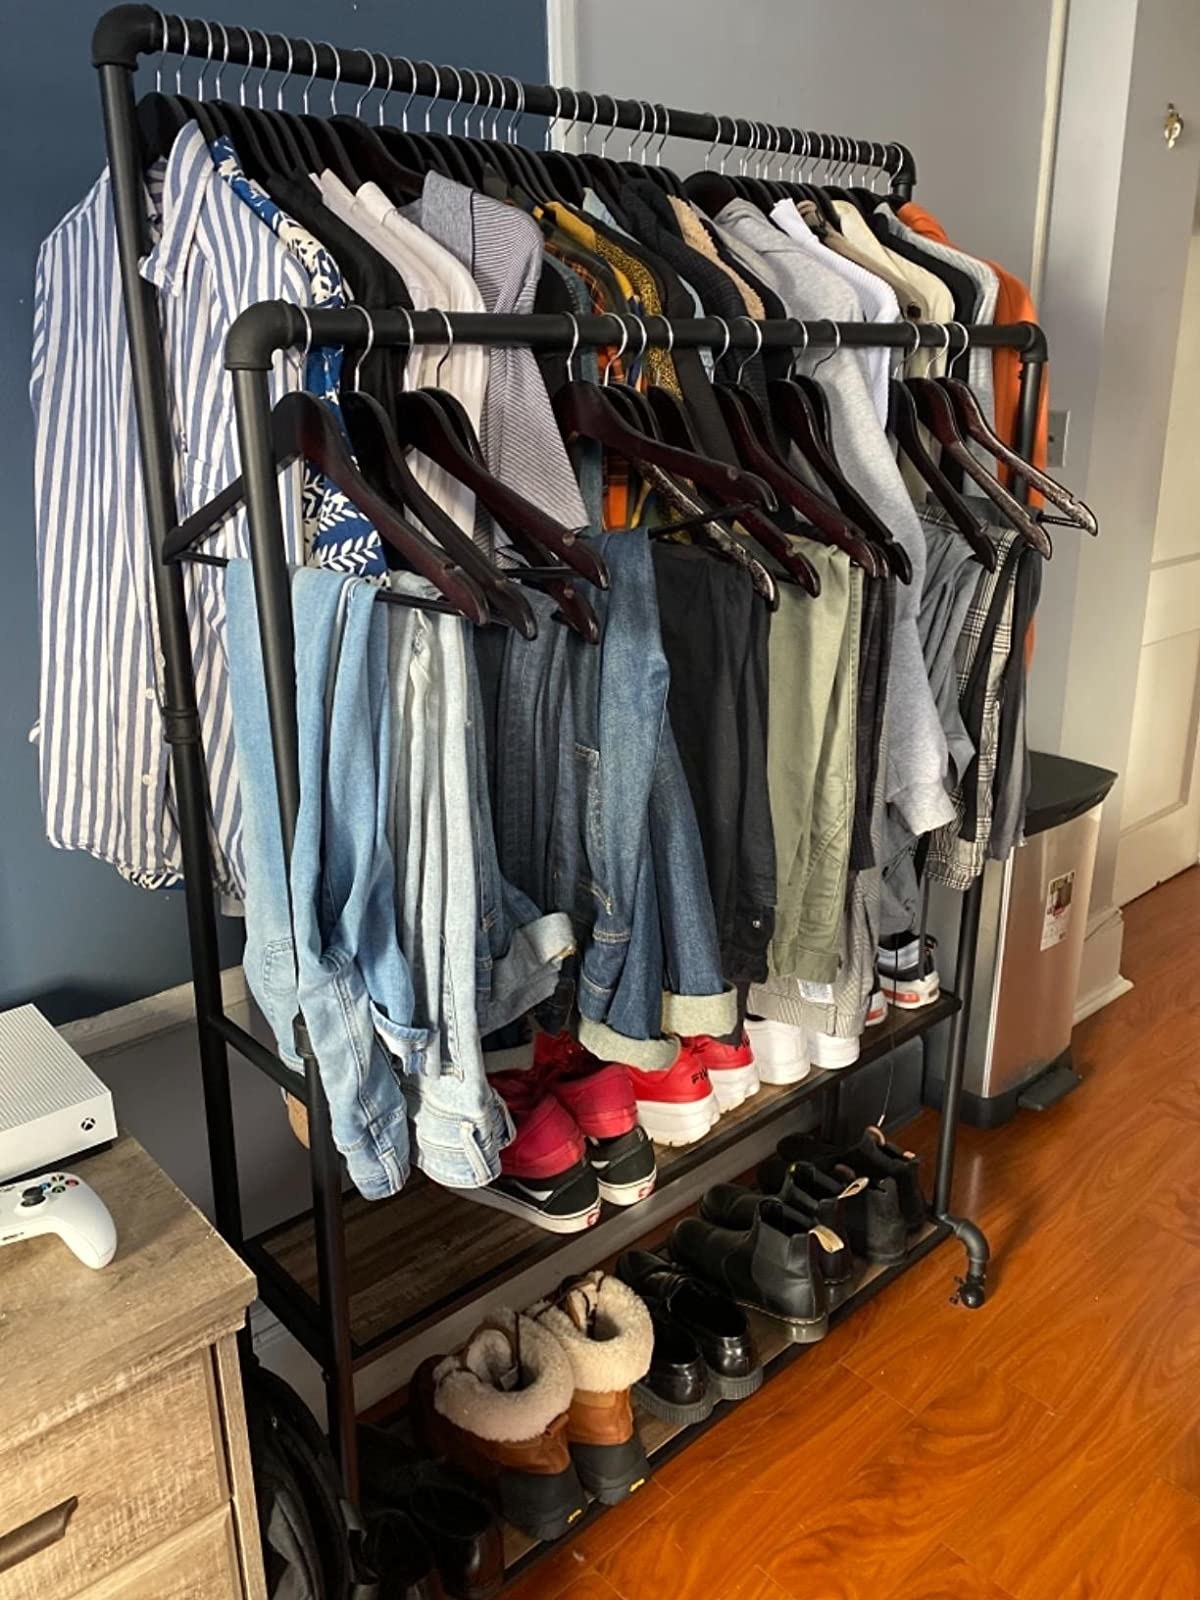 The rack in a bedroom